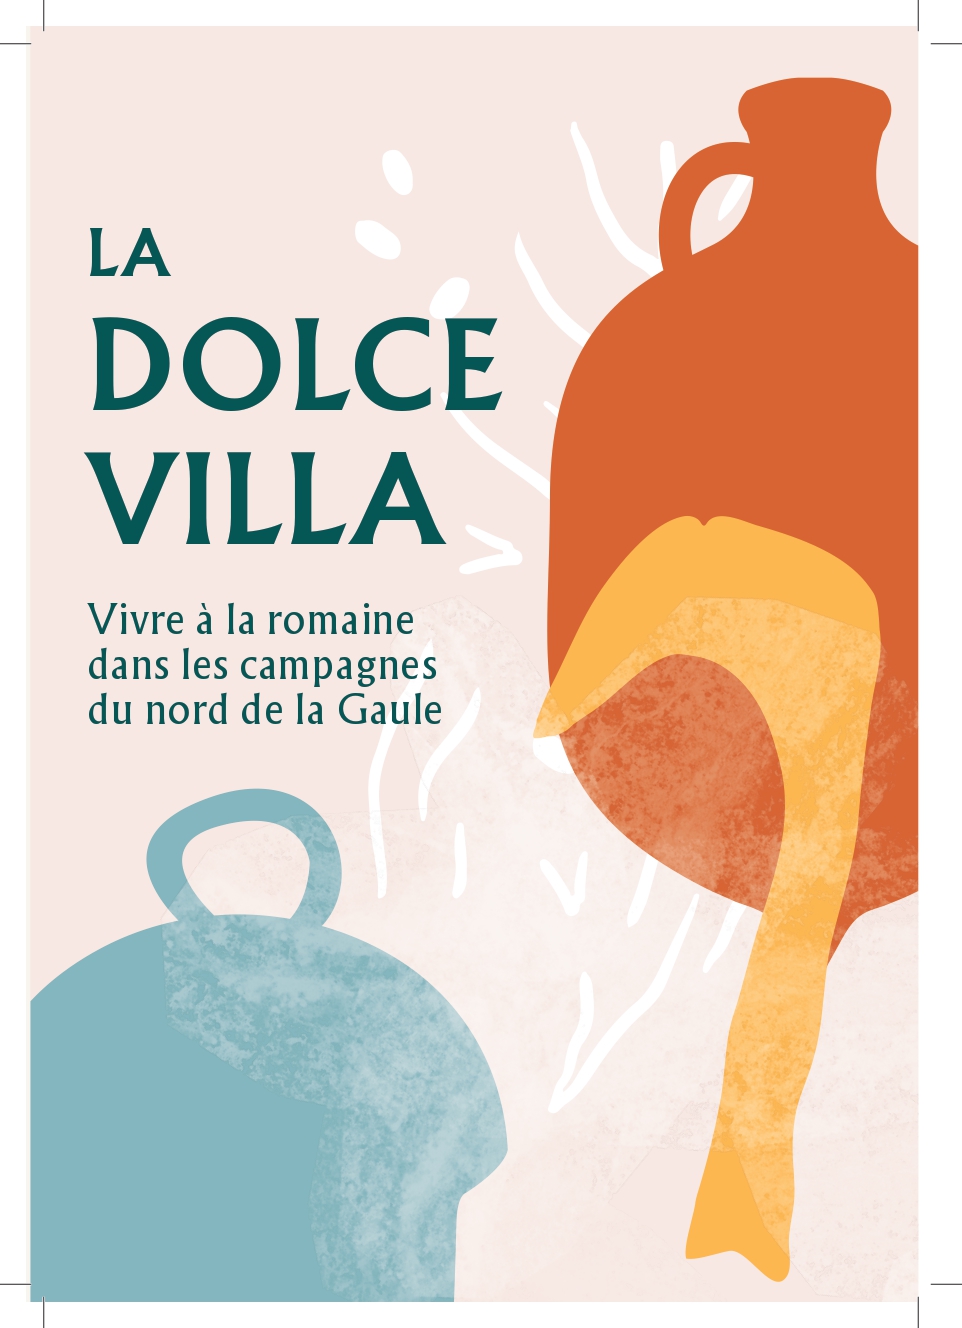 Dolce-Villa-Programme-annuel-148x210mm-12p_page-0004.jpg